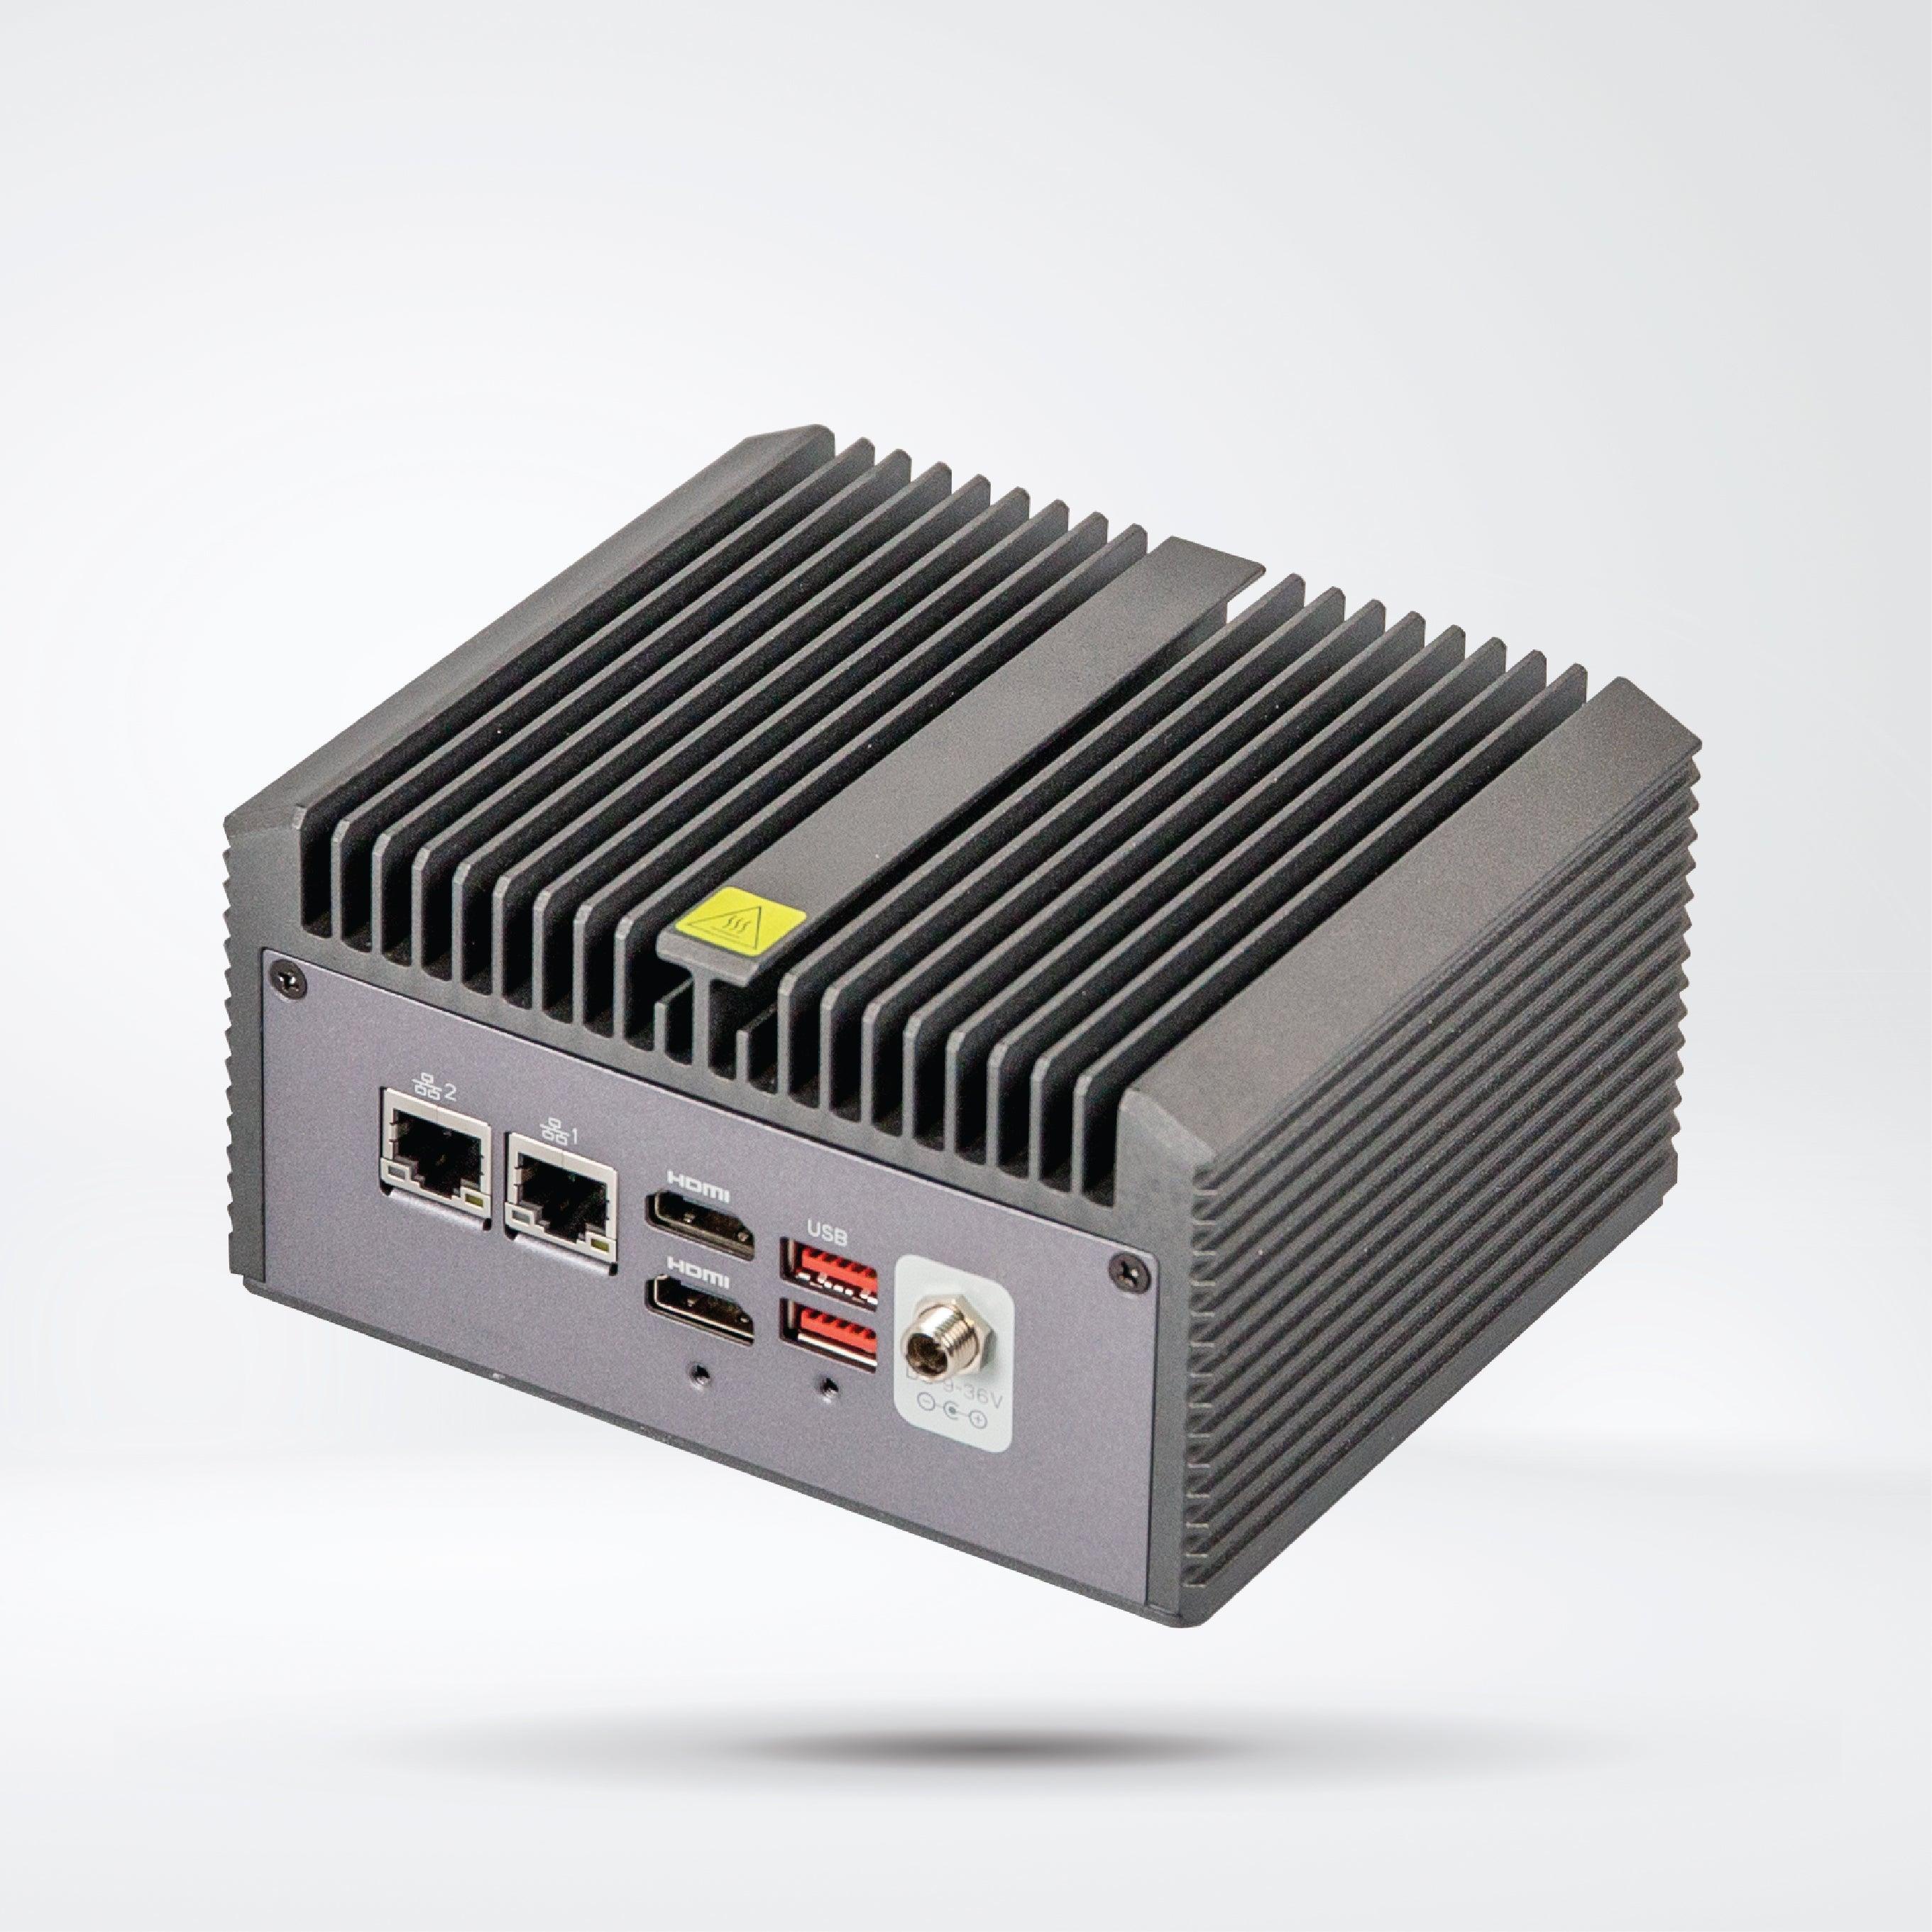 QBiX-TGLA1135G7-A1 Industrial system with Intel® Core™ i5-1135G7 Processor - Riverplus